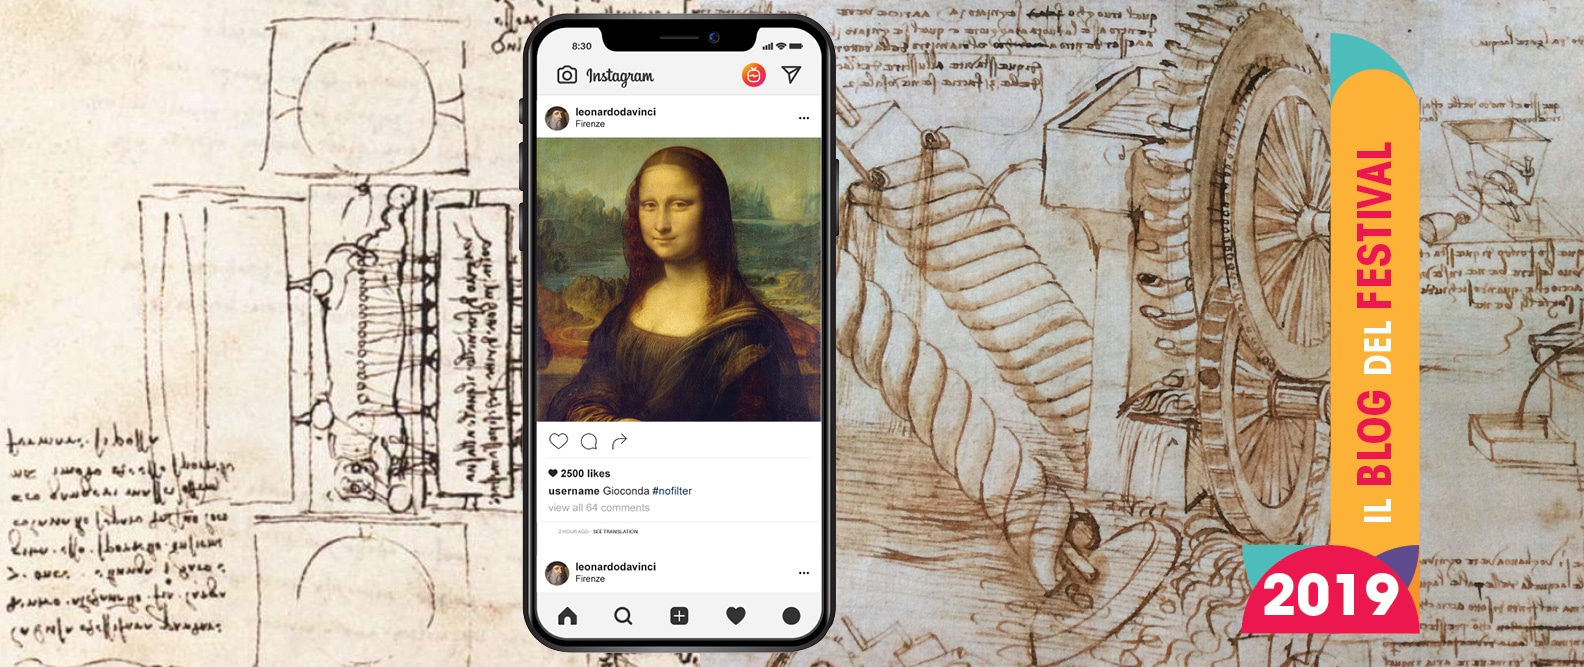 Se Leonardo Da Vinci avesse avuto Instagram